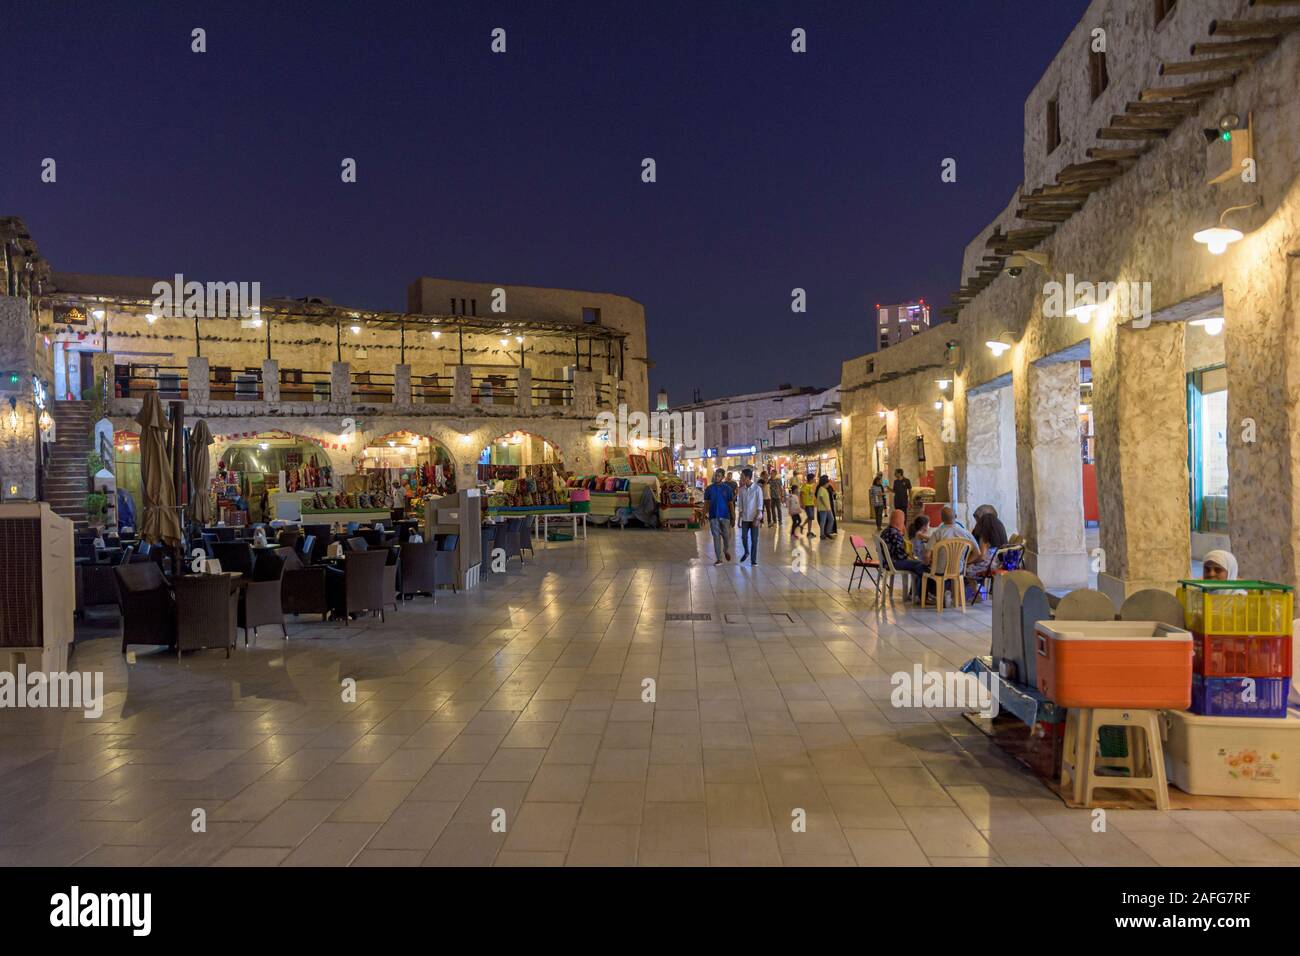 Hot summer evening at Souq Waqif, Doha, Qatar Stock Photo